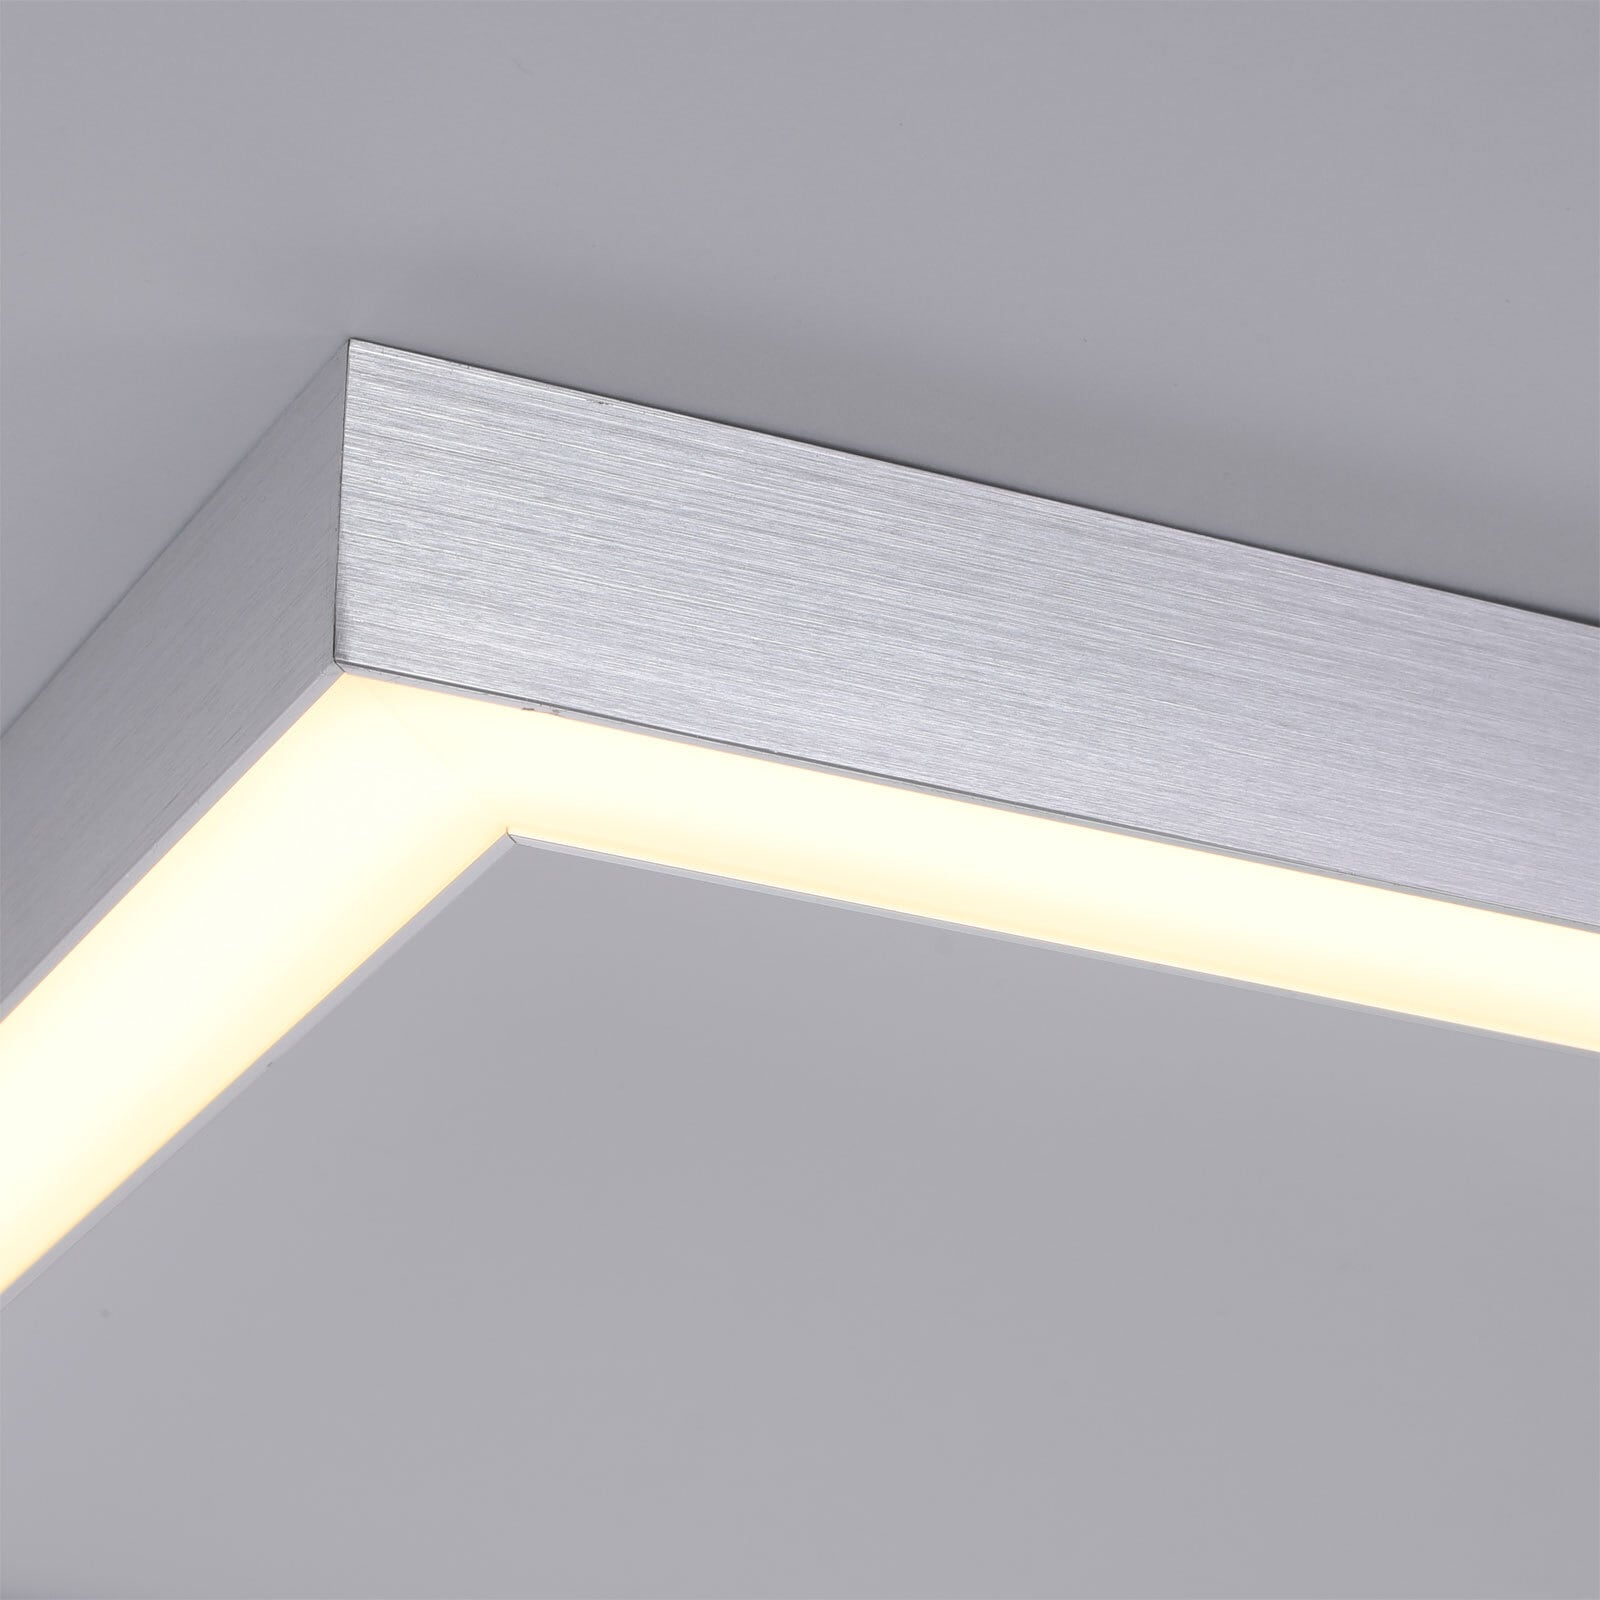 Paul Neuhaus LED Deckenlampe PURE-LINES 110 x 30 cm alufarbig